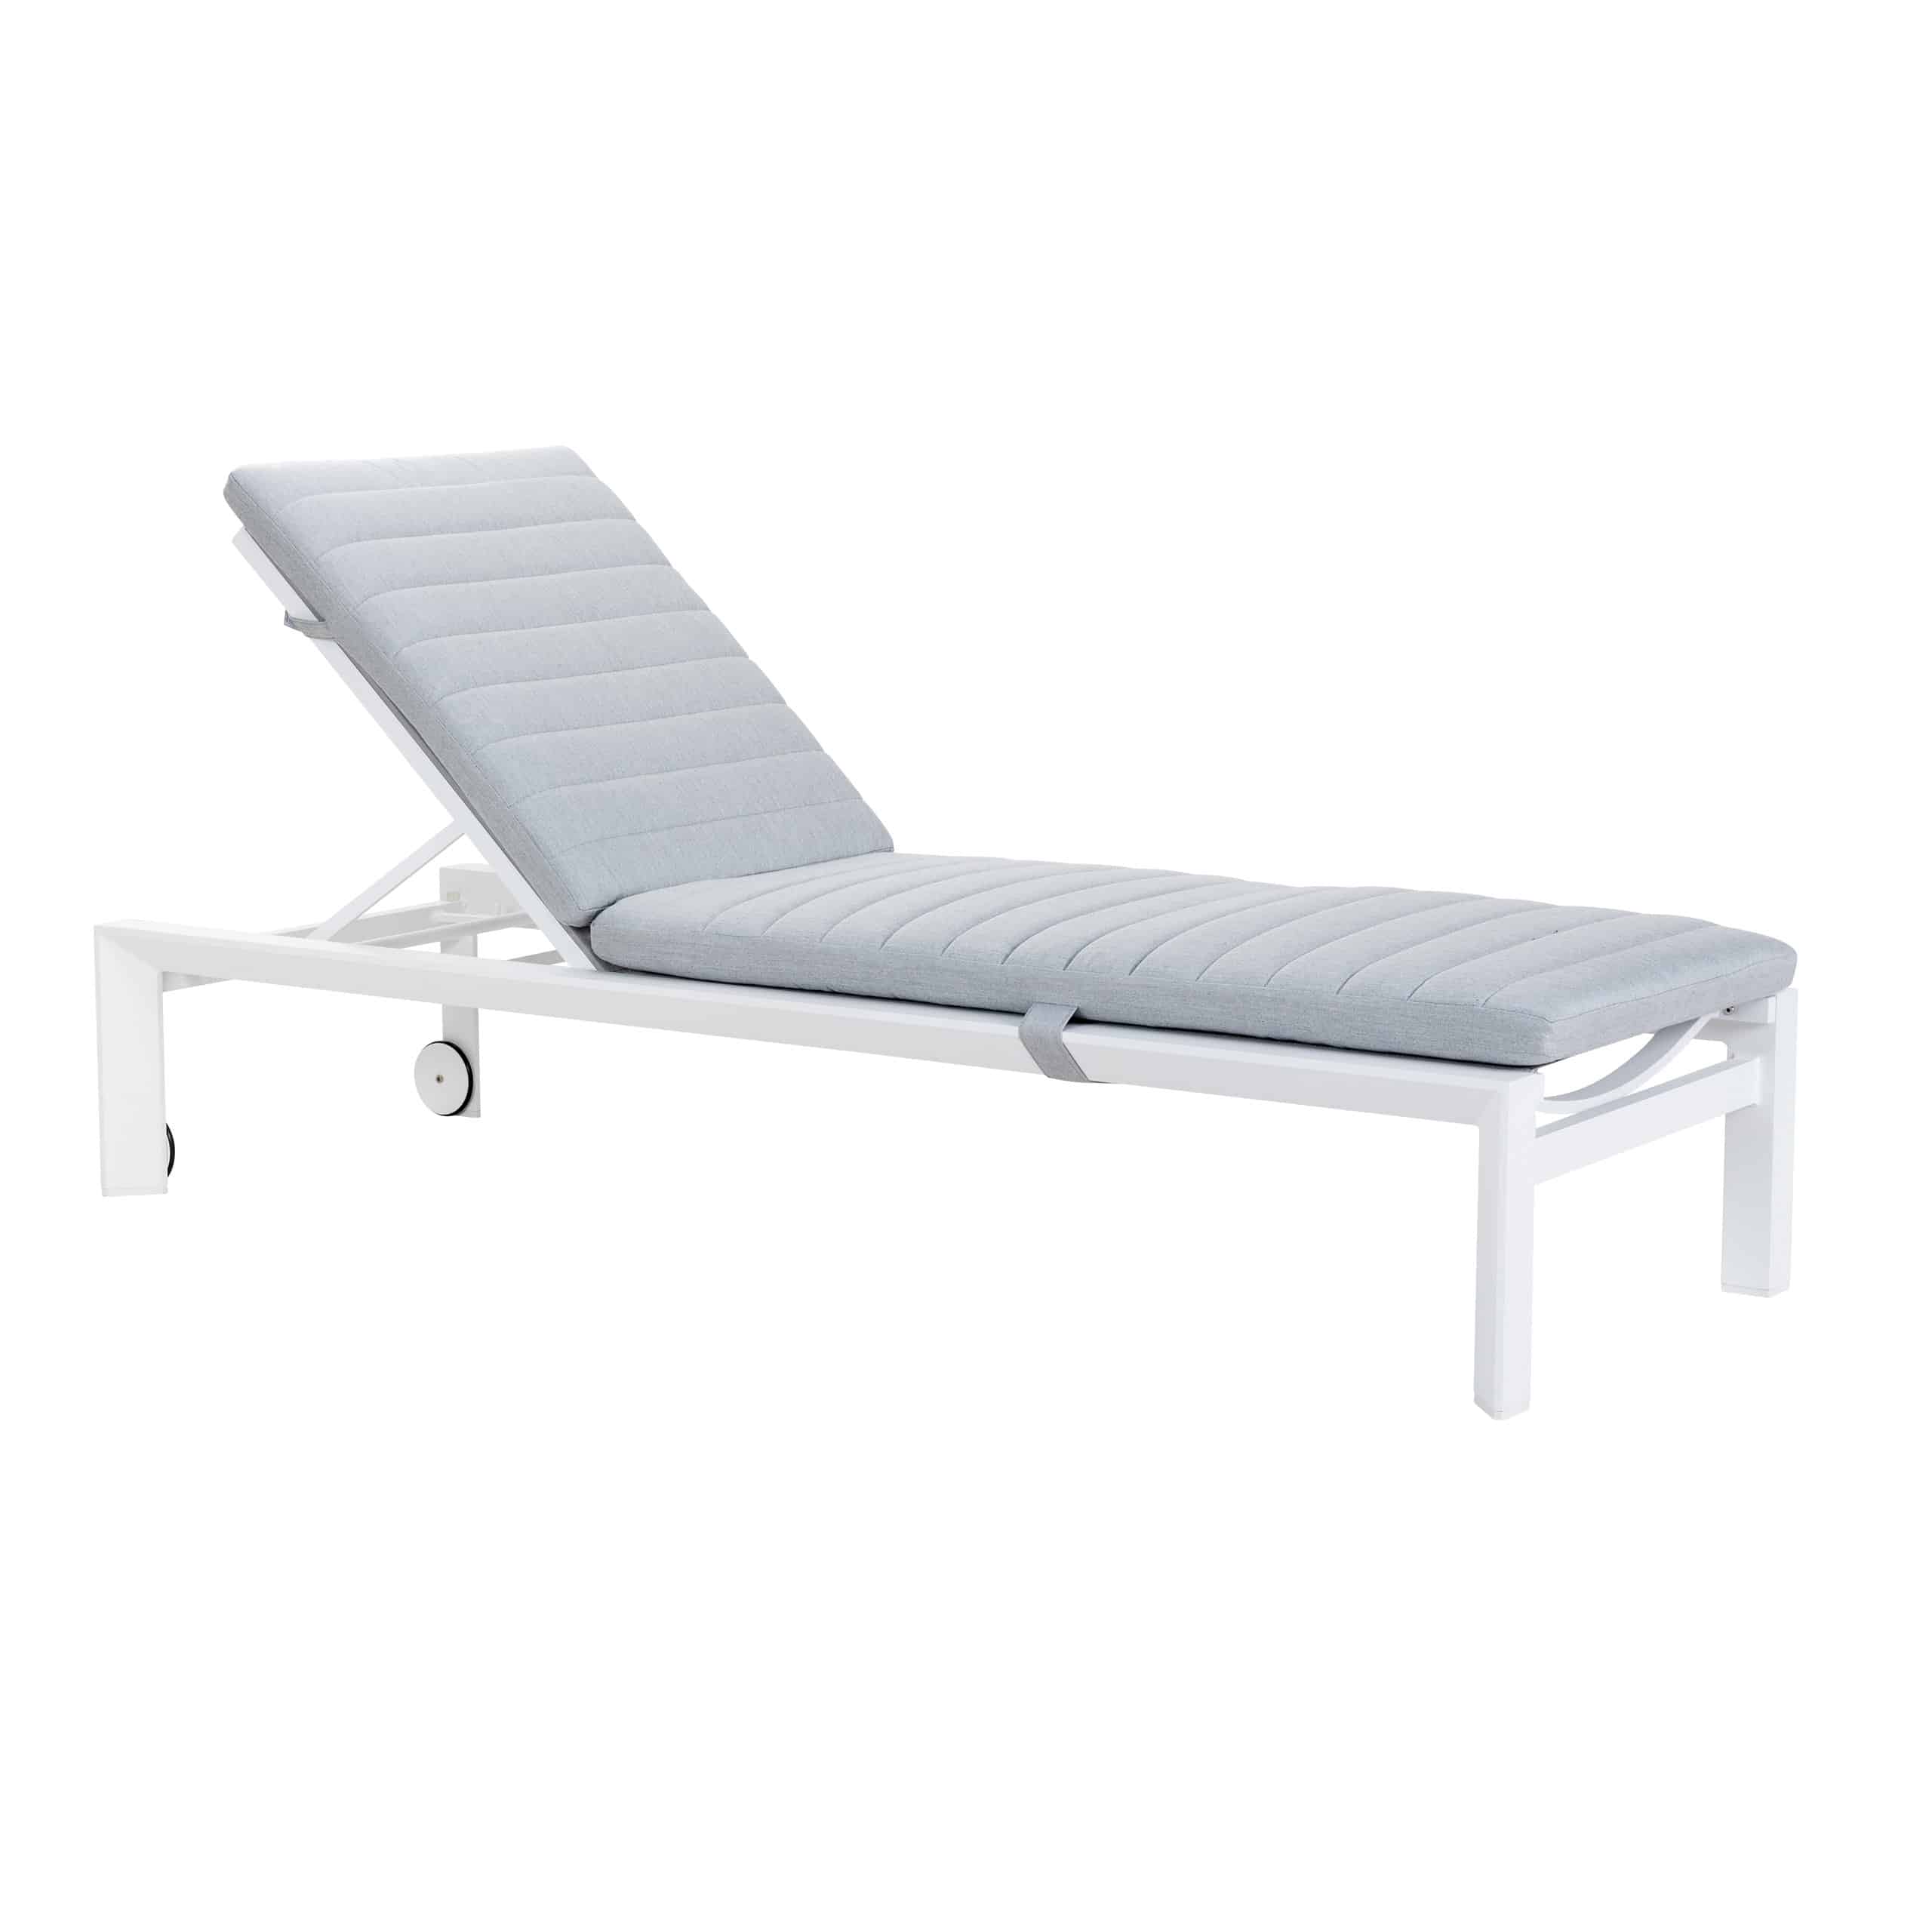 Design Warehouse - 128410 - Amazon Aluminium Sun Lounger (White) with Sunbrella Cushion (Natté Grey Chiné)  - White